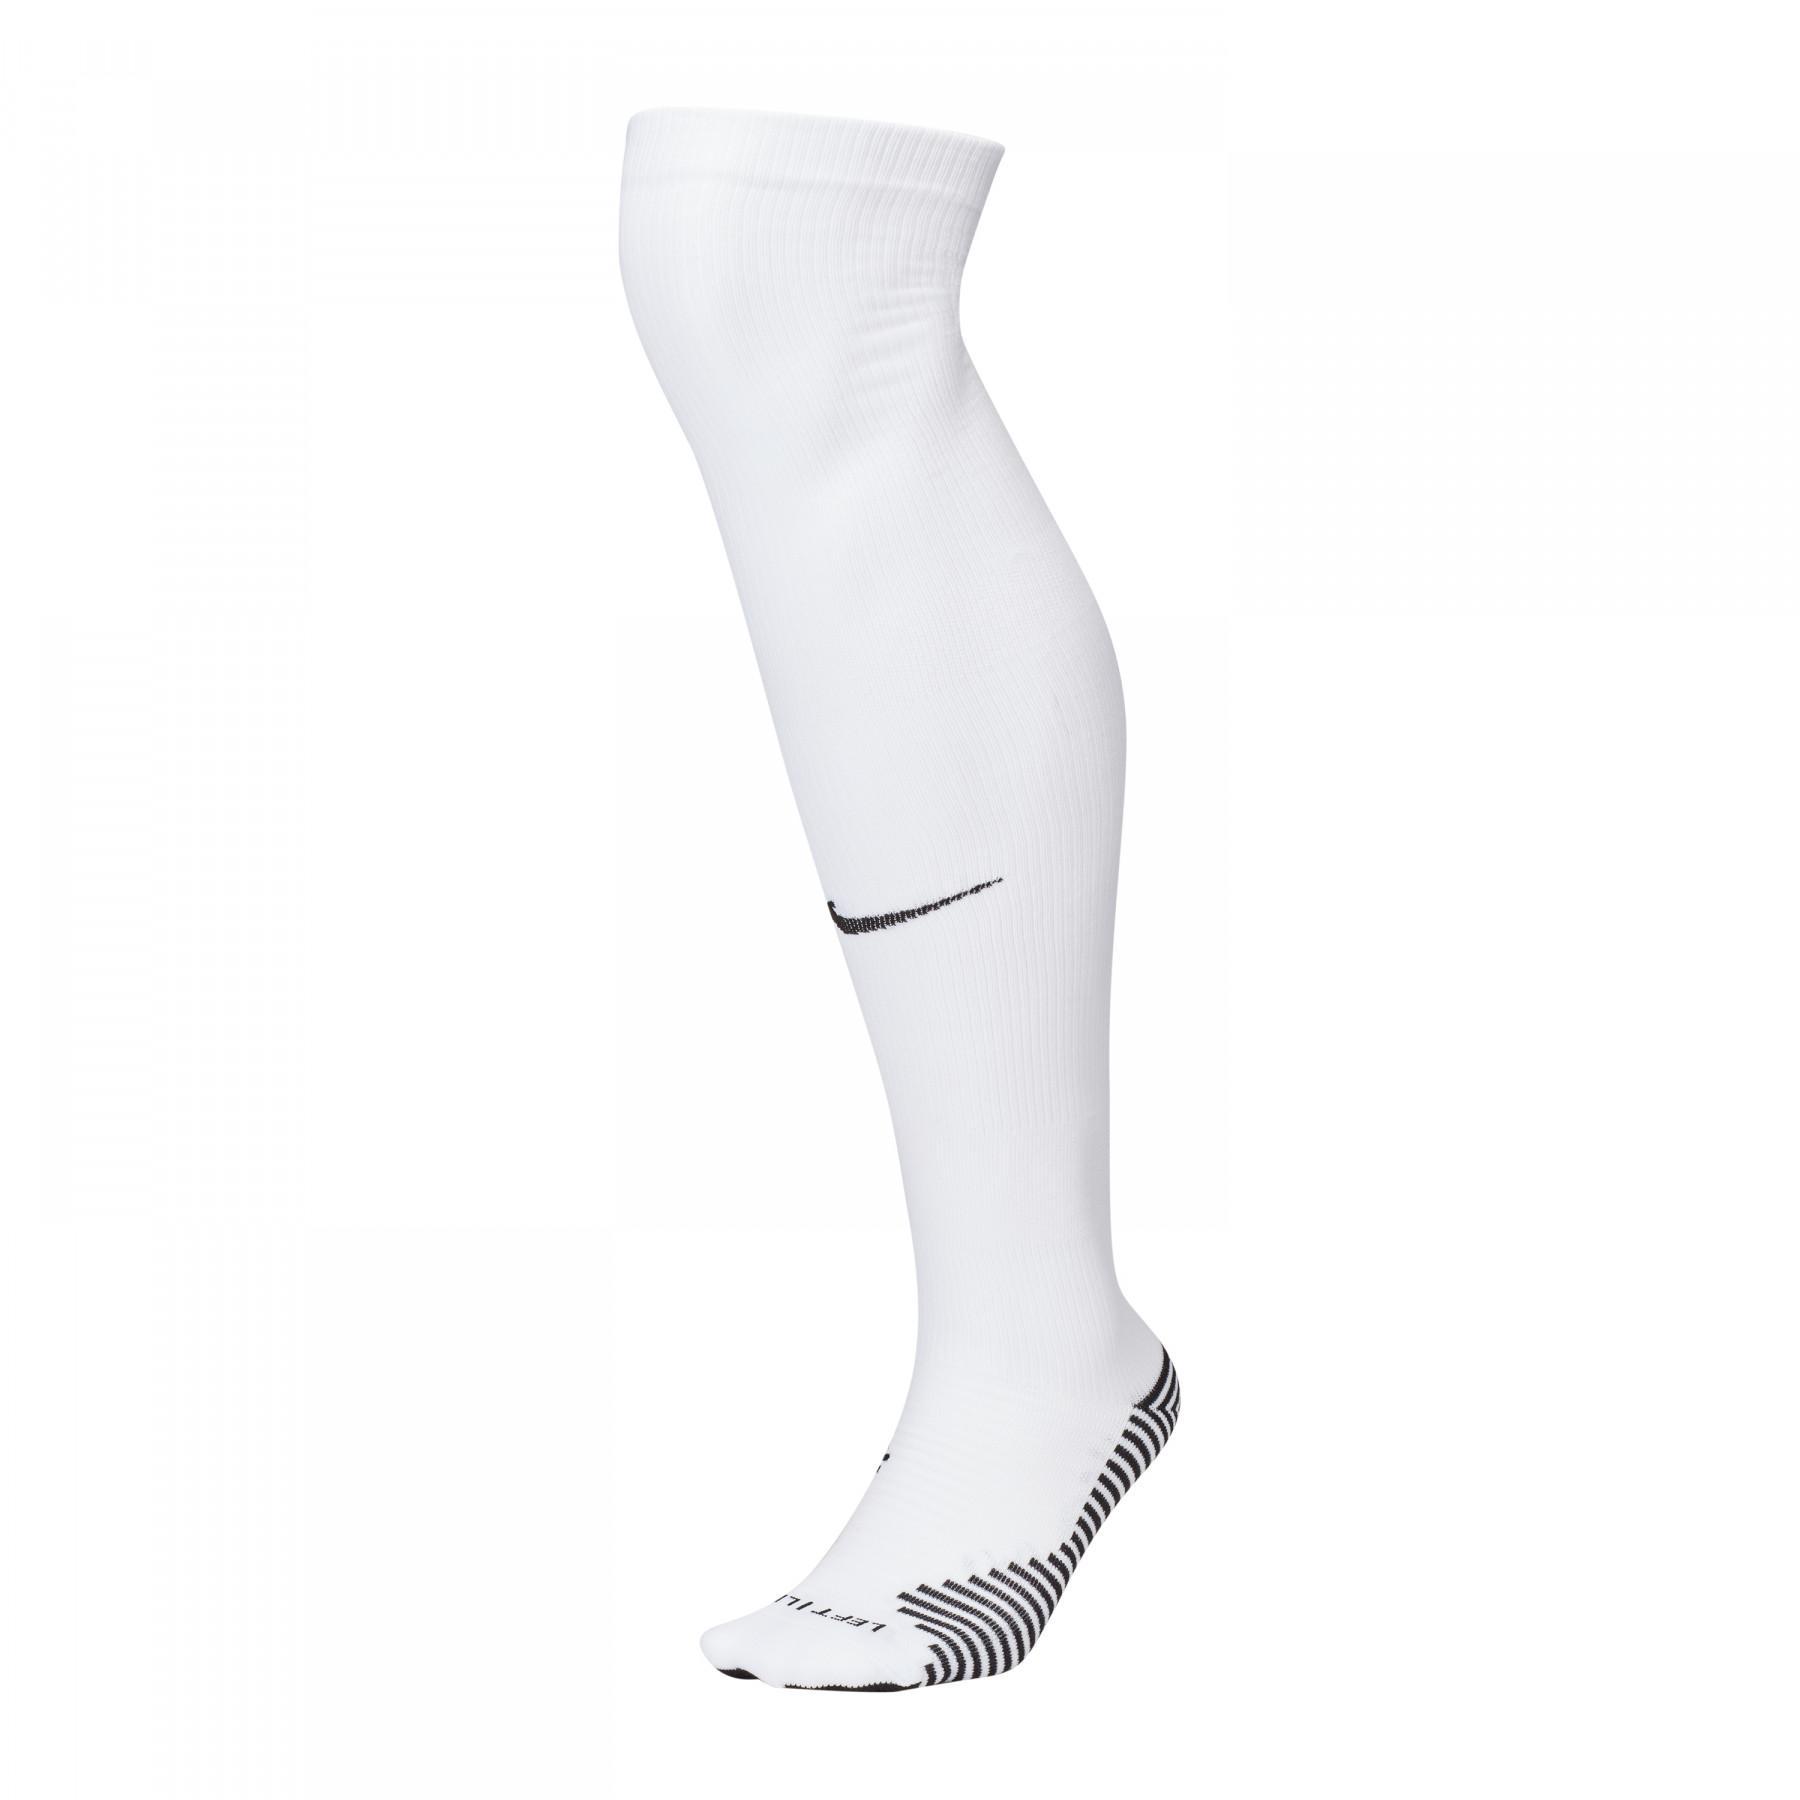 Socks Nike Squad Grip